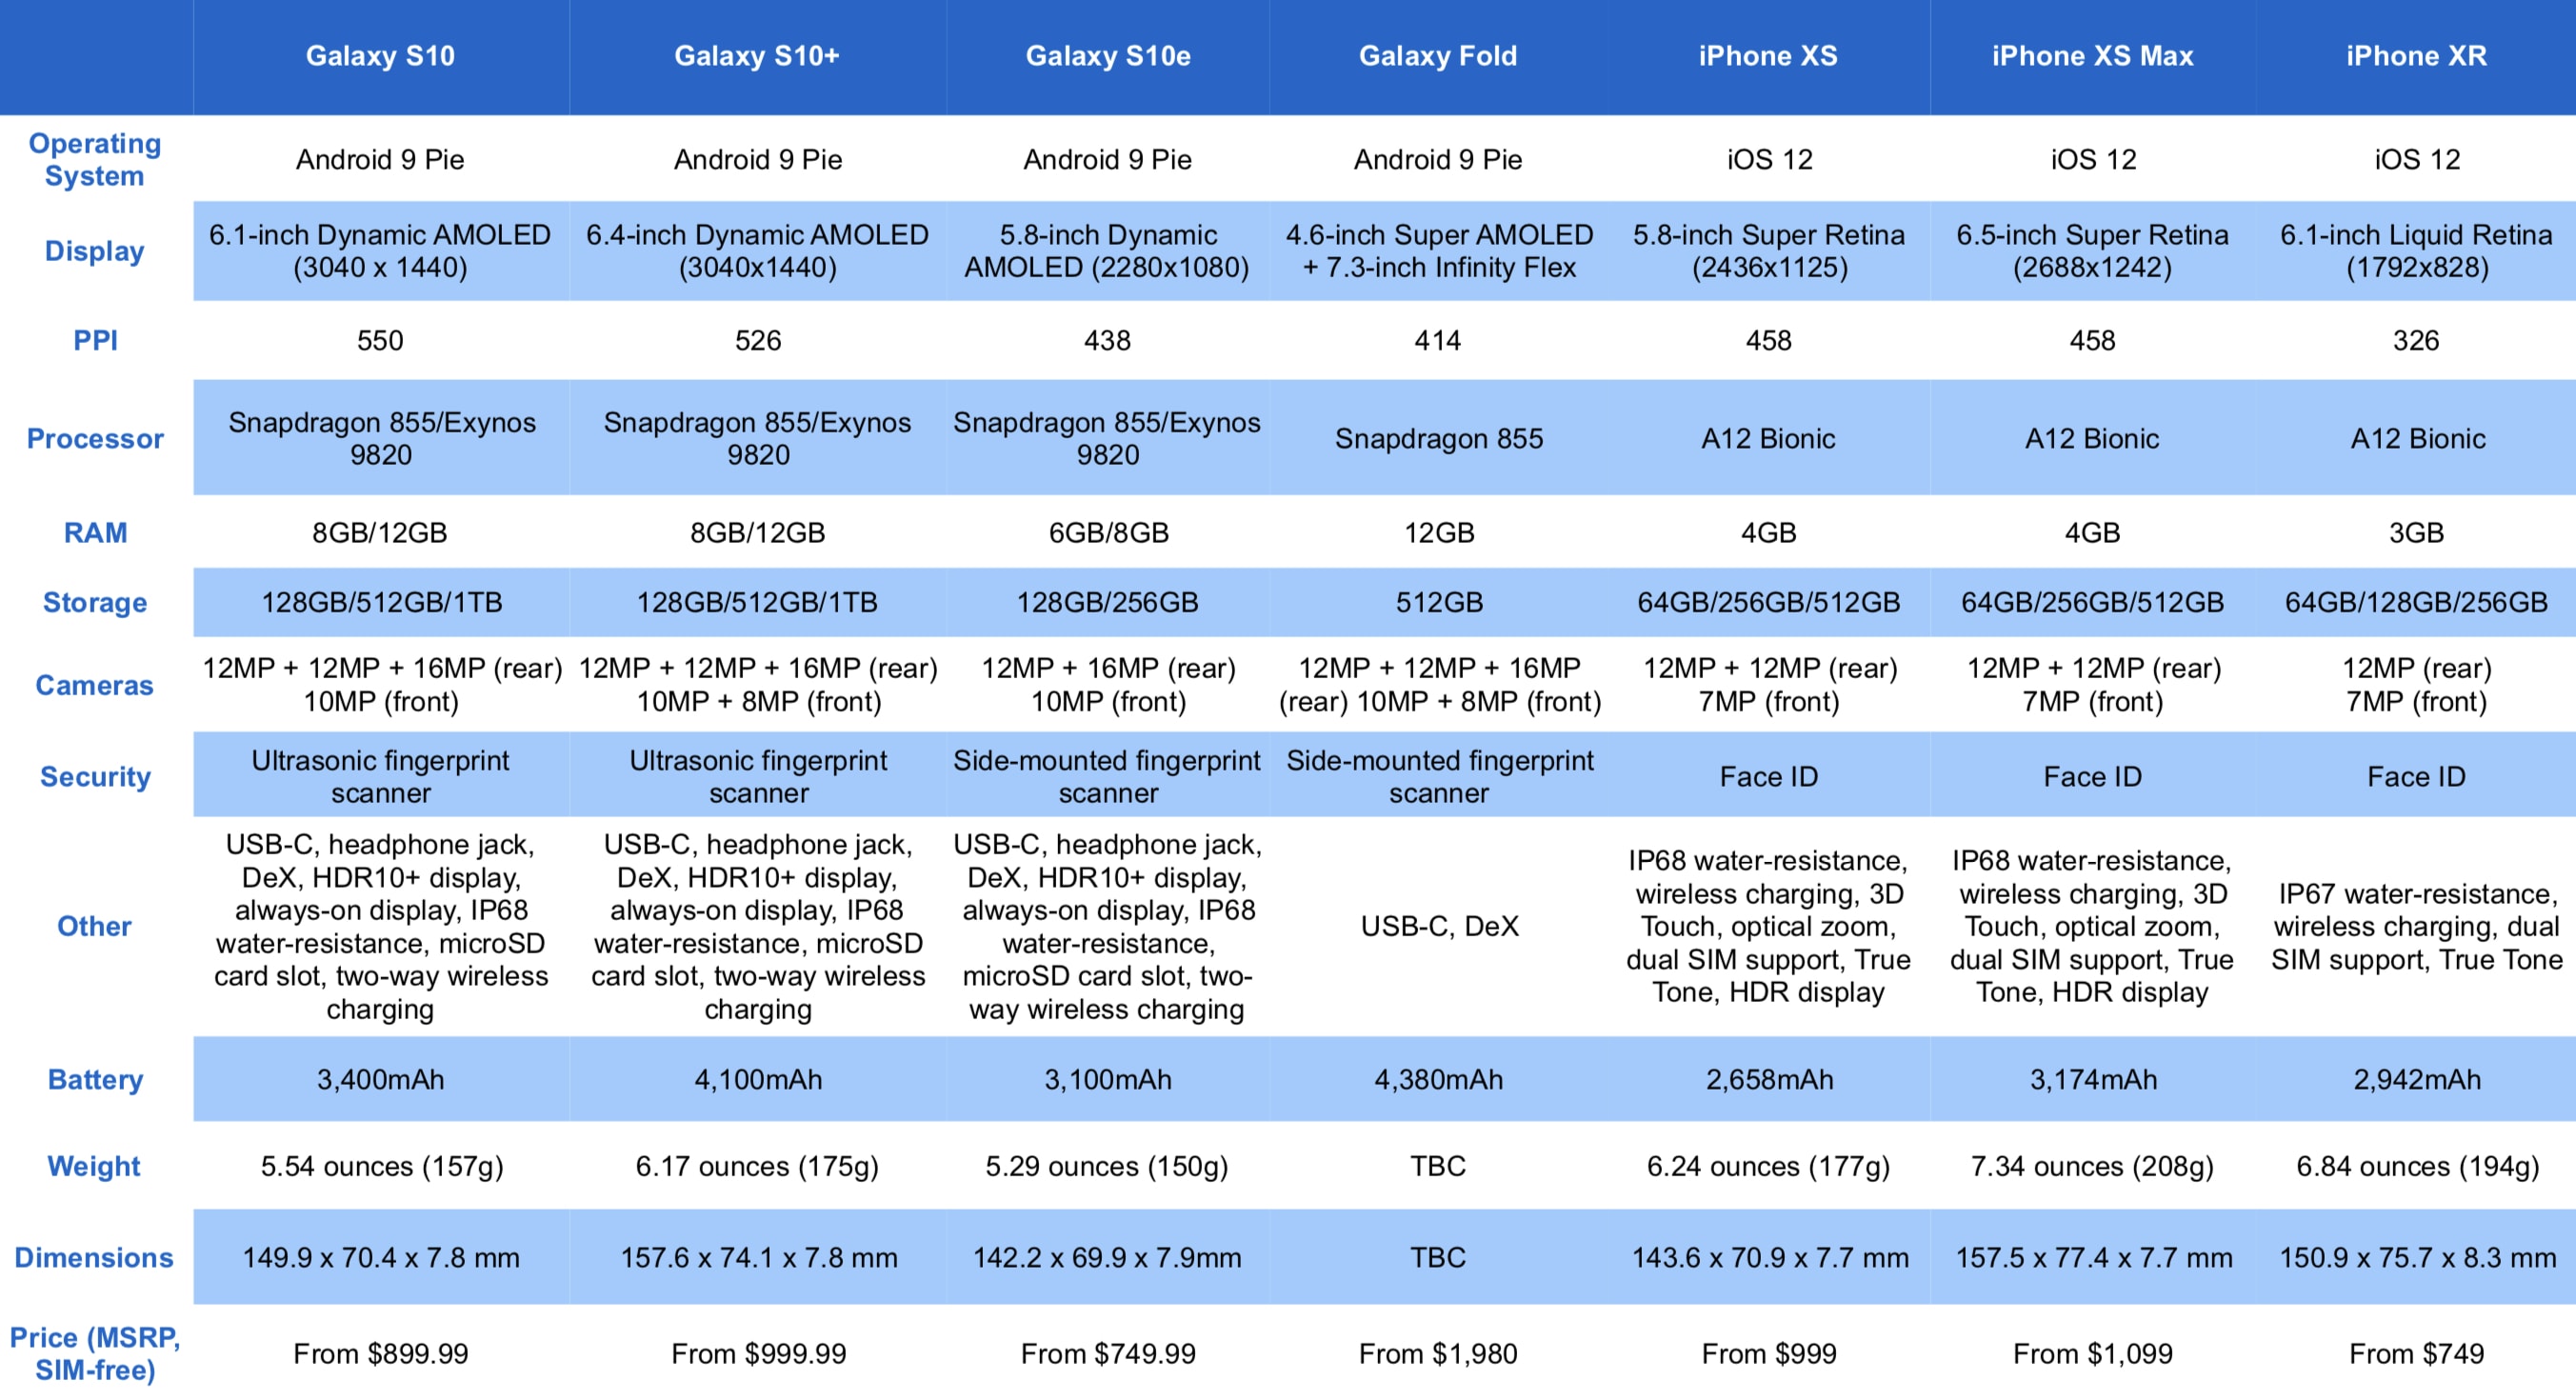 Galaxy S10 iPhone comparison